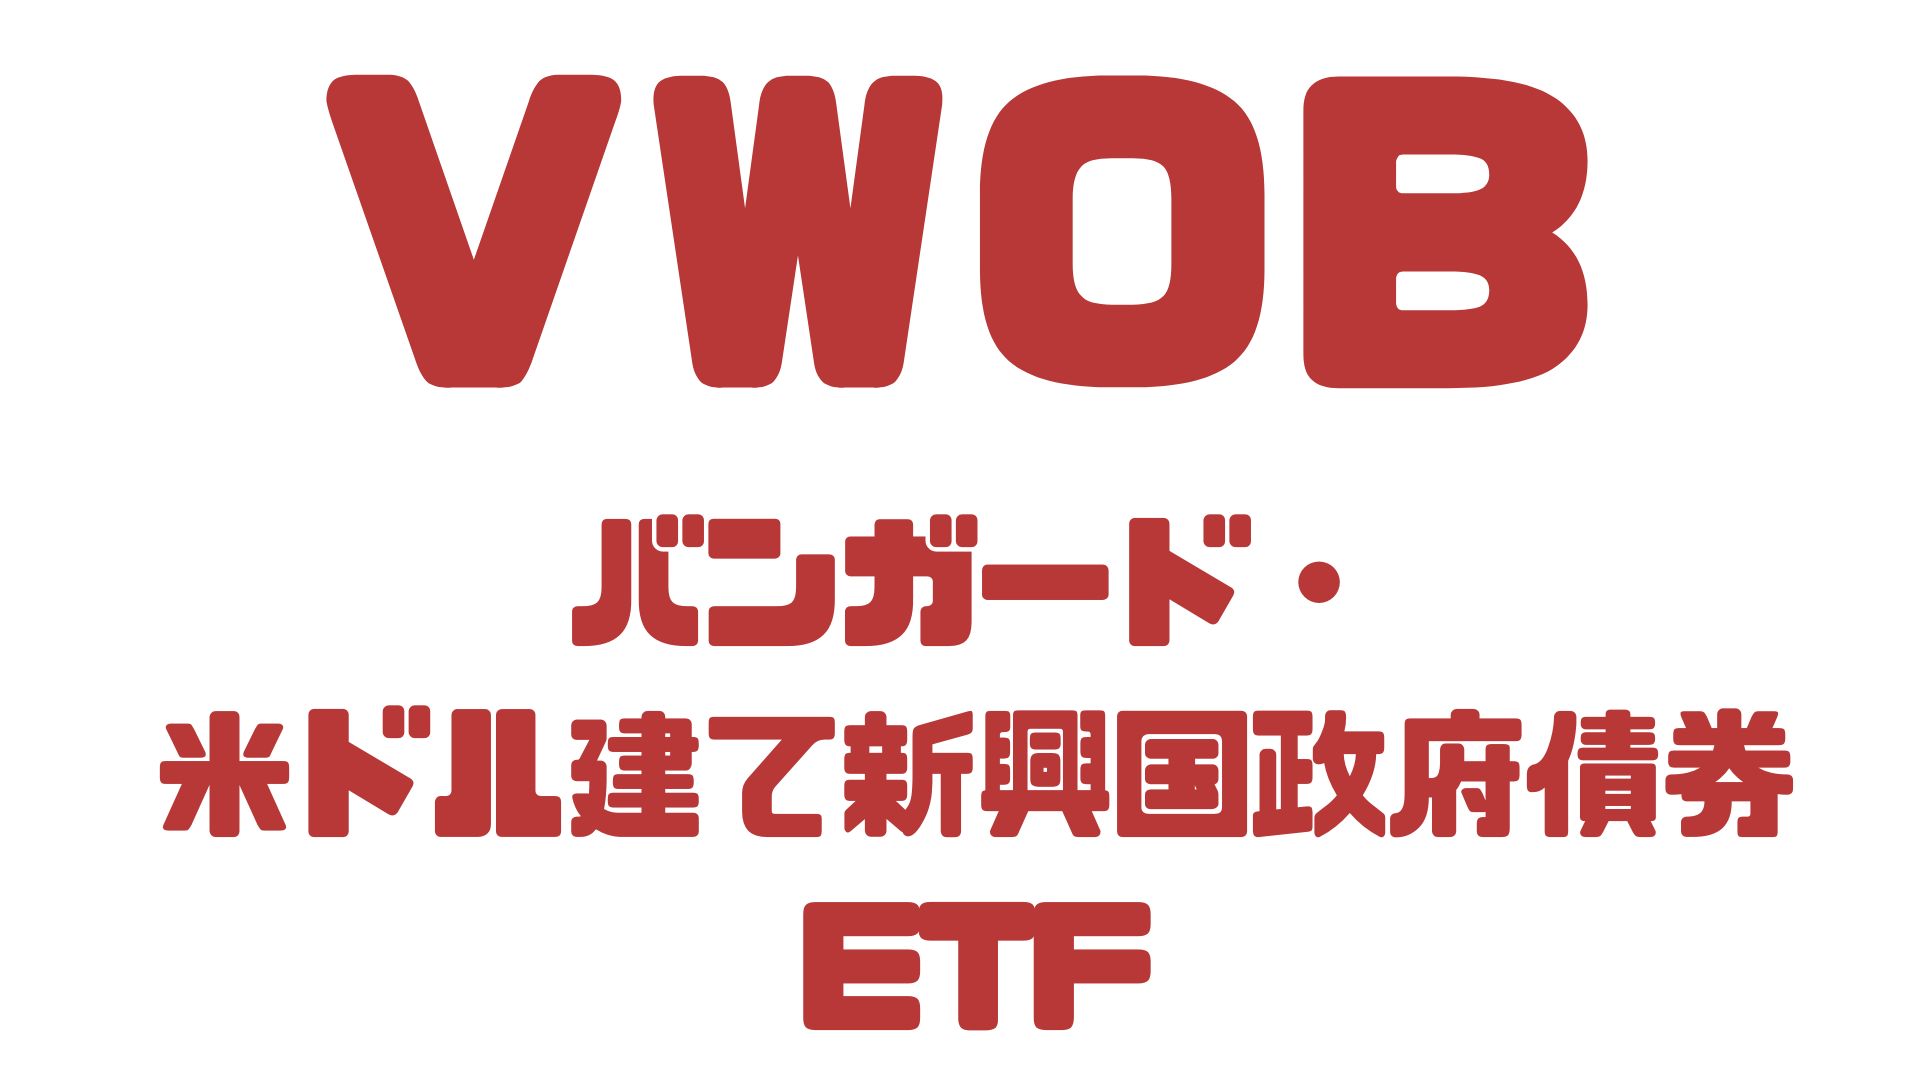 VWOB：バンガード・米ドル建て新興国政府債券ETF